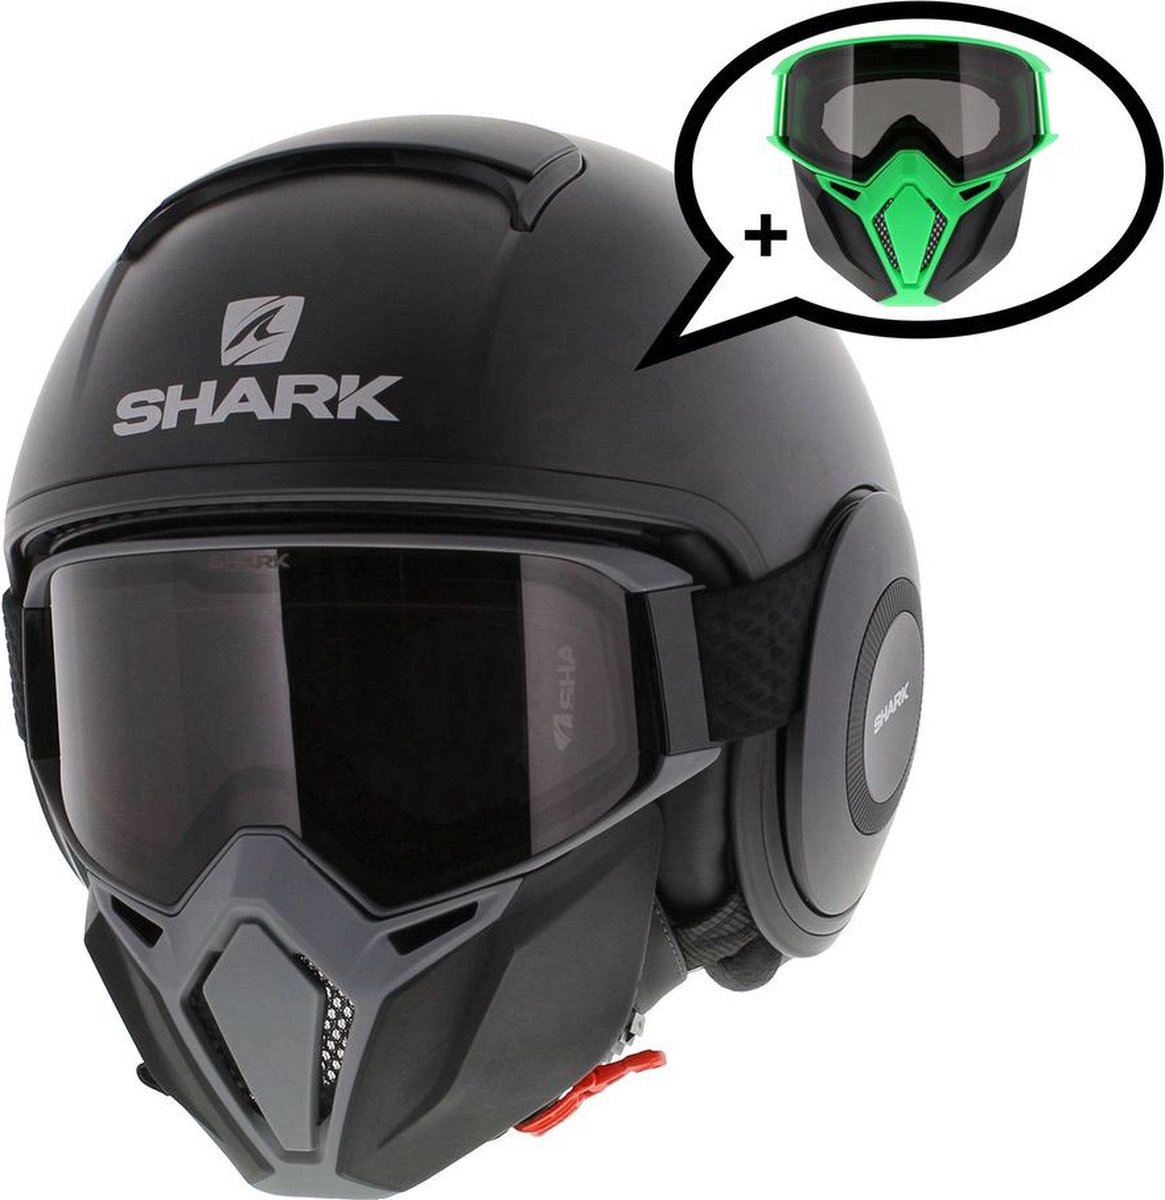 Shark Street Drak helm mat zwart antraciet XL - Special Edition met gratis extra zwart groen mondstuk